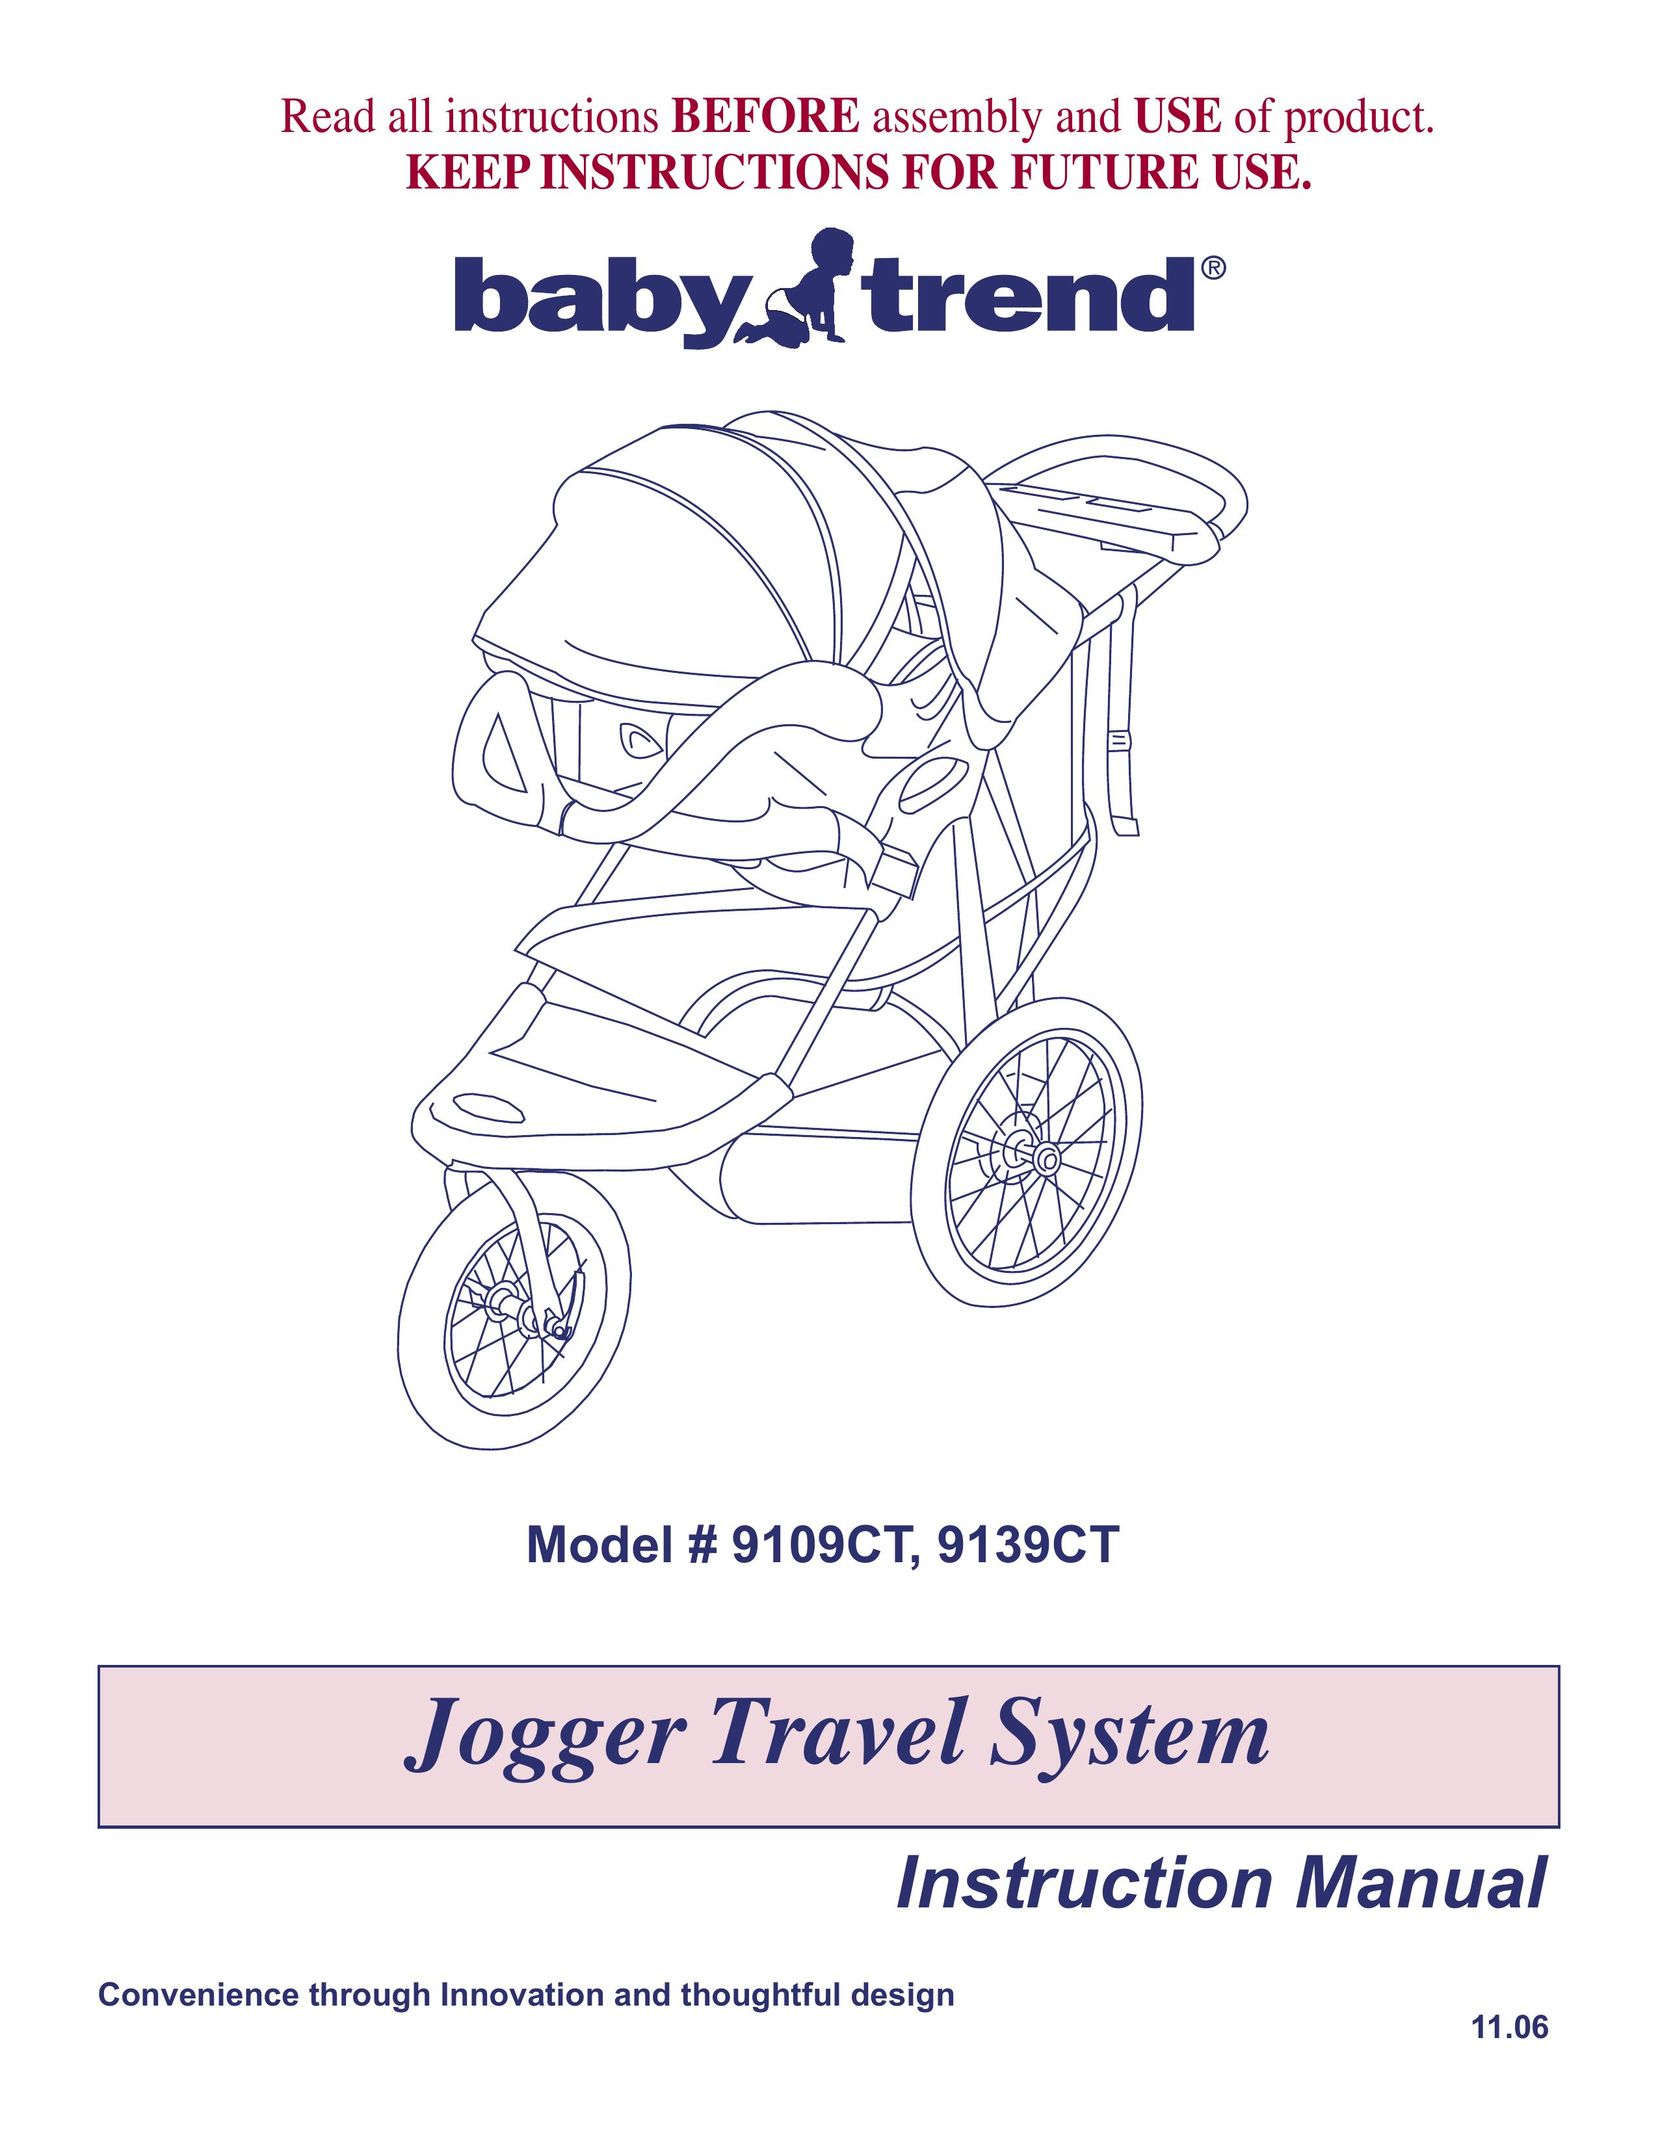 Baby Trend 9109CT Stroller User Manual